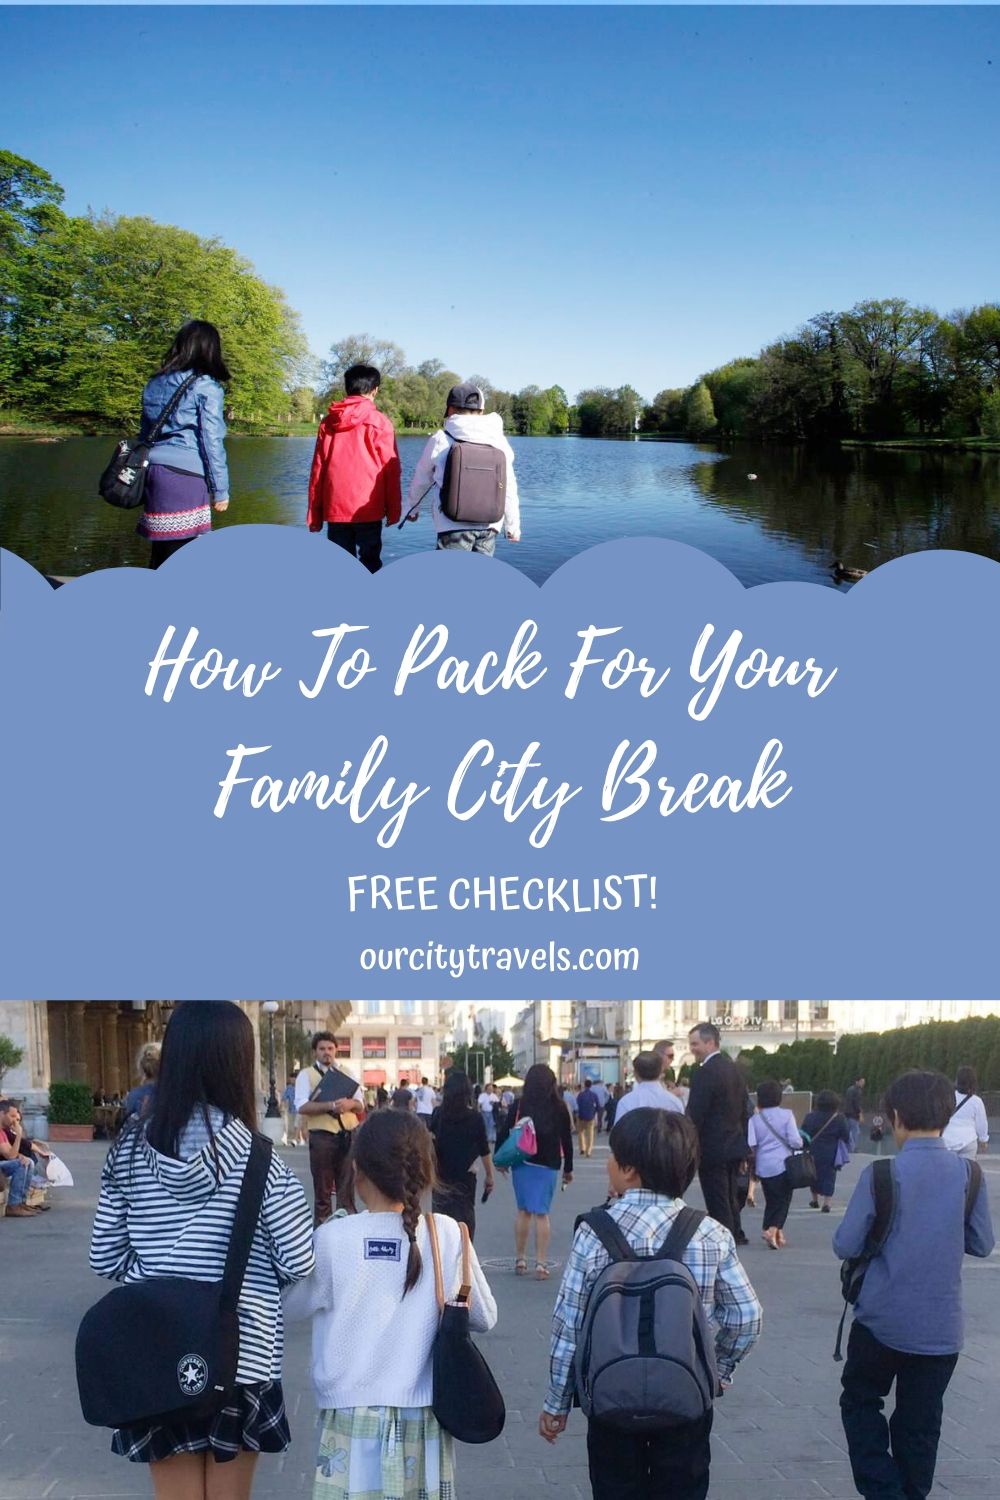 8 Tips For Packing for Your Family City Break